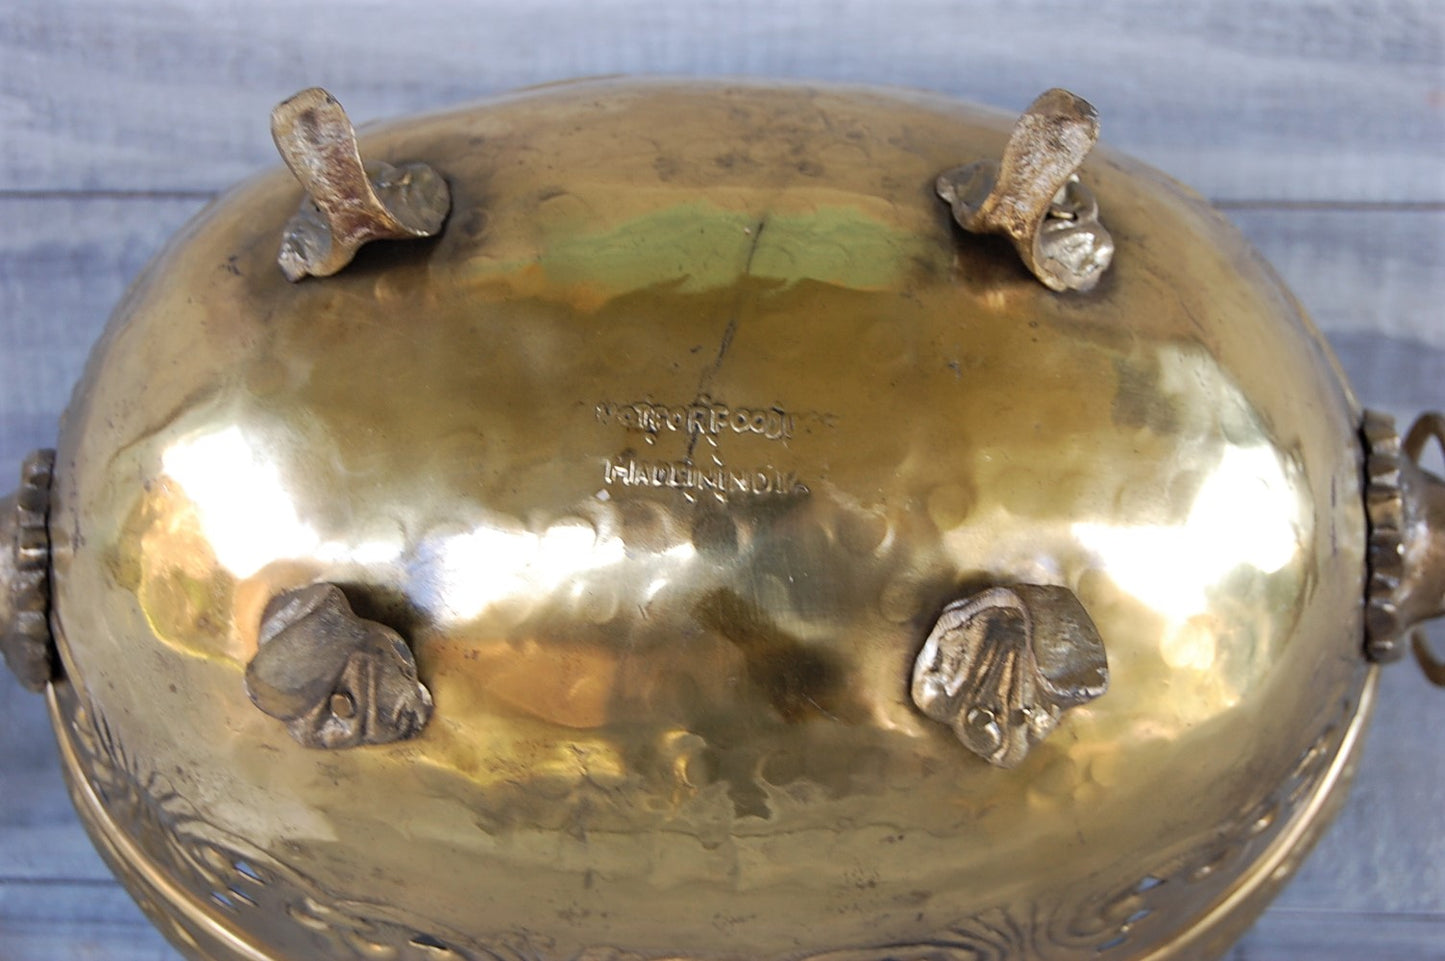 Brass Fleur de Lis bowl